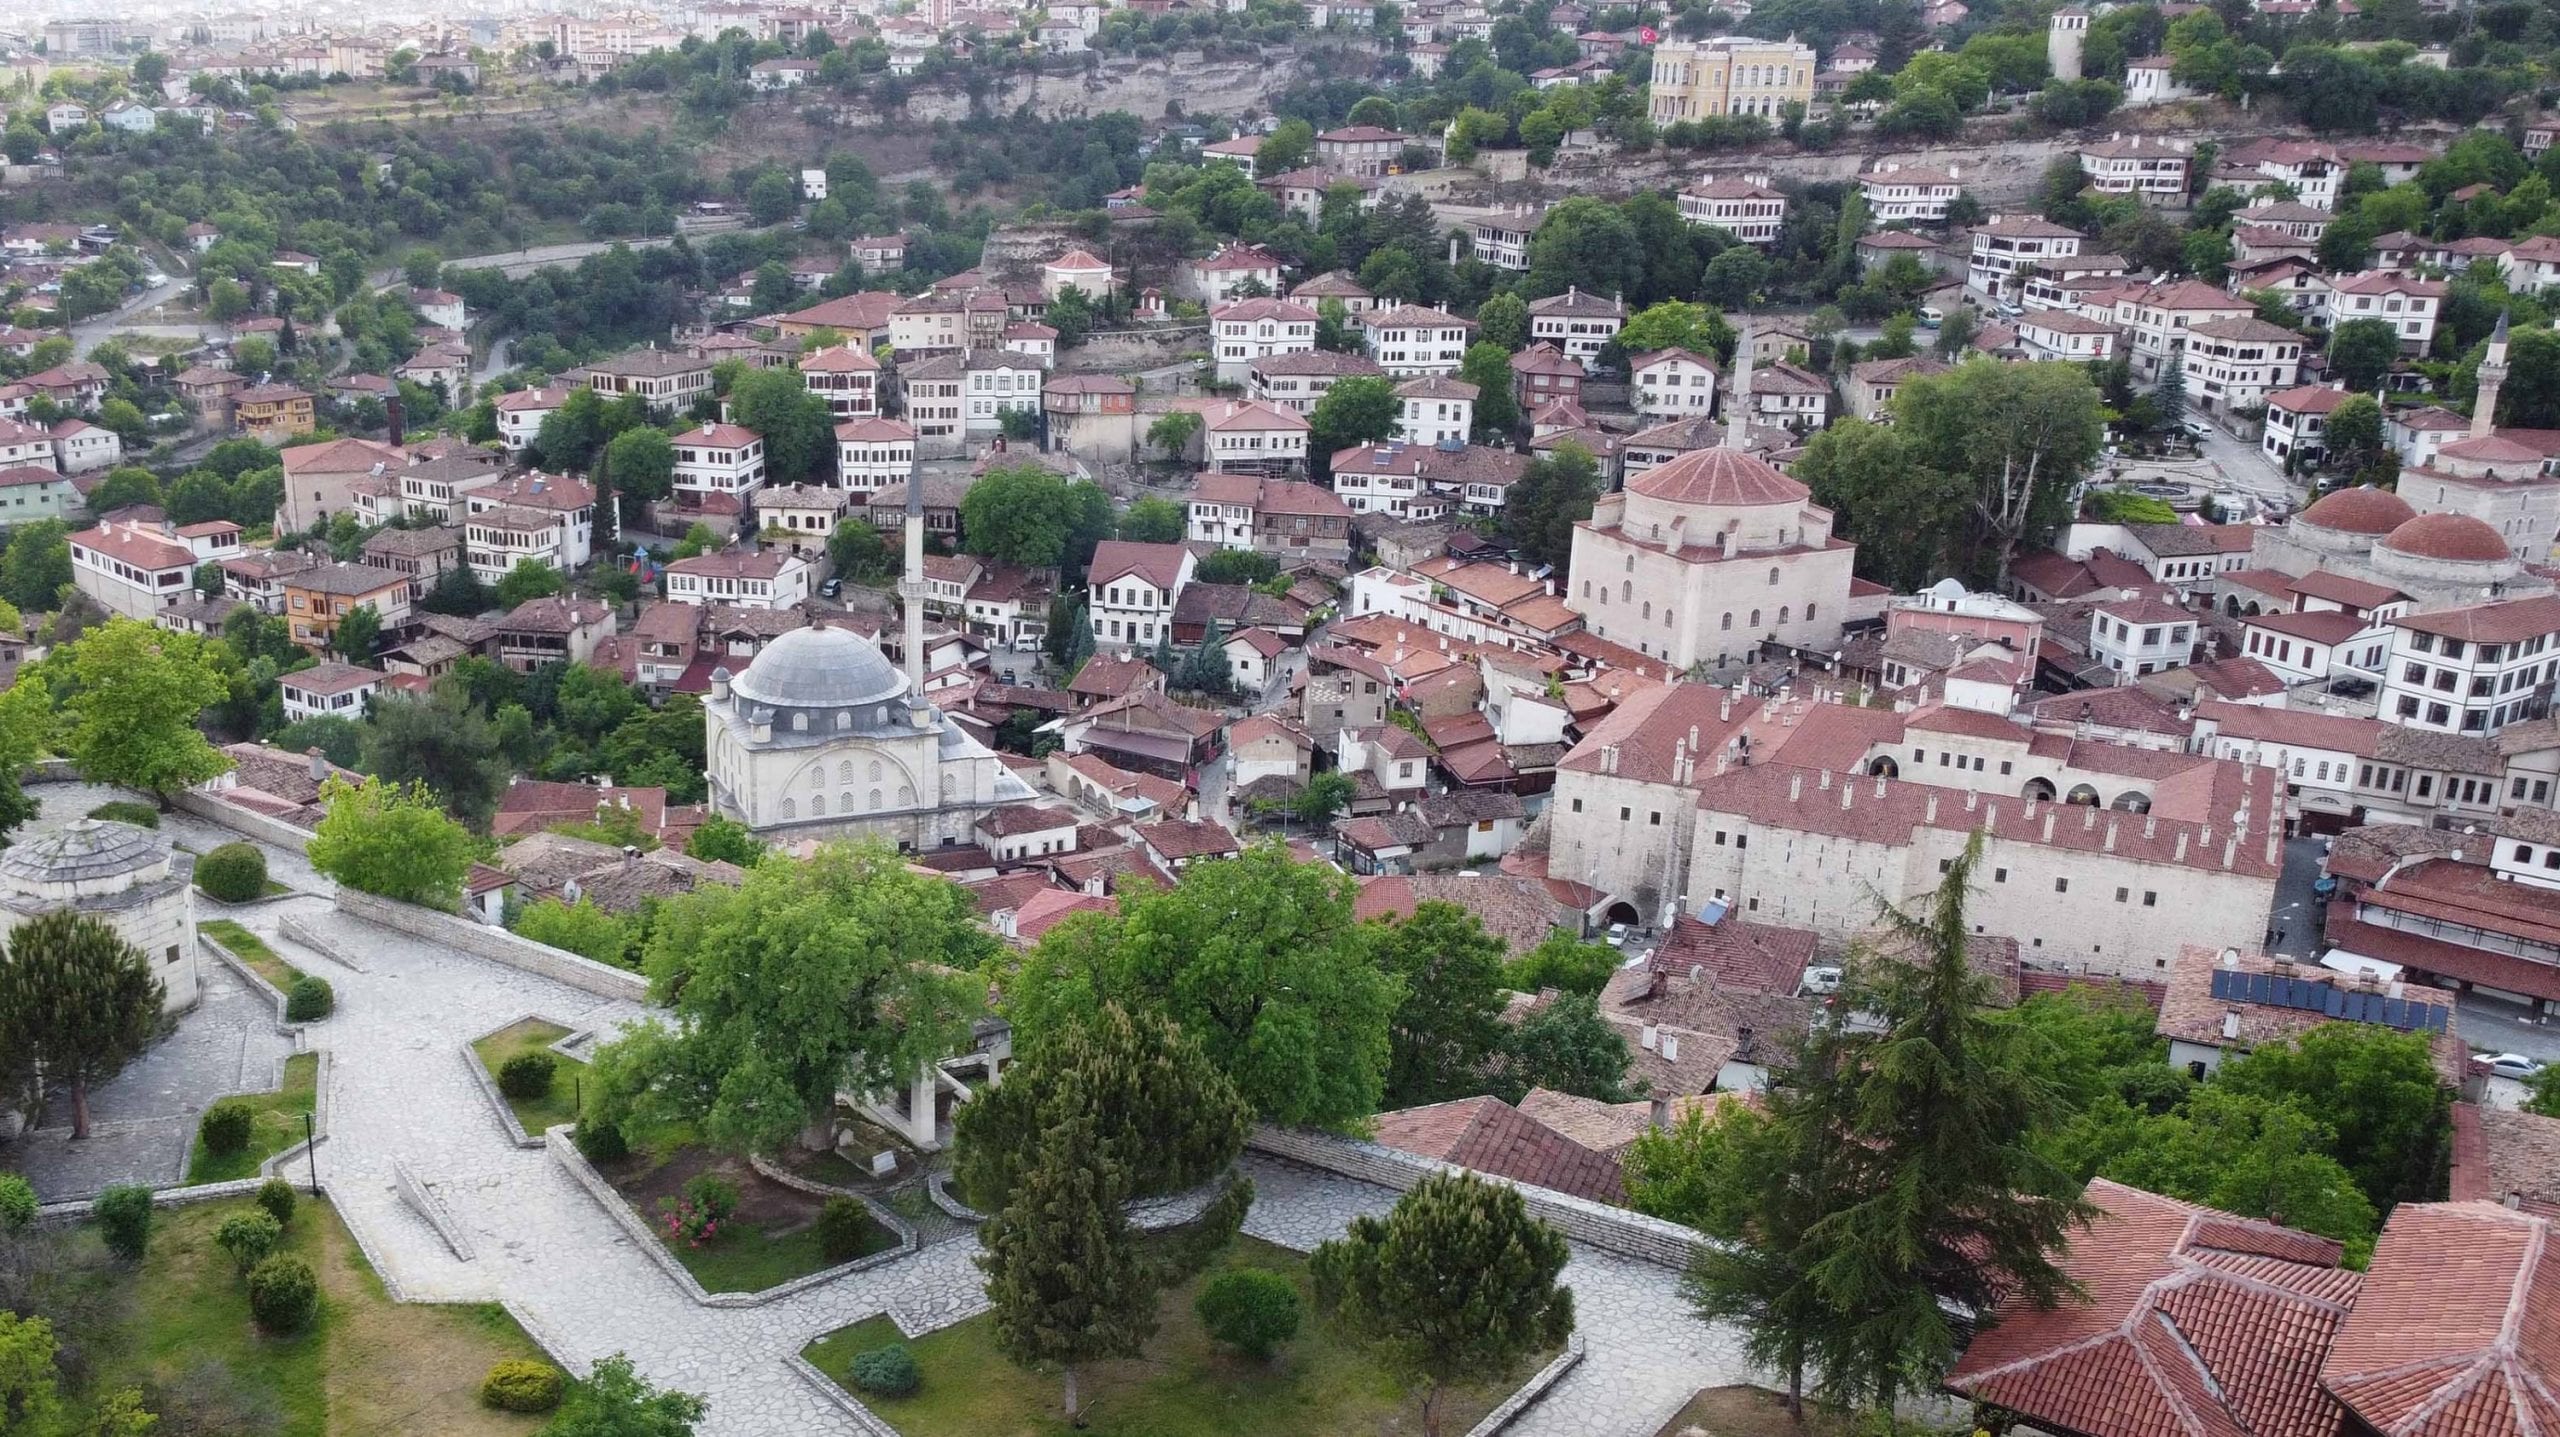 Safranbolu, well-preserved town of Ottoman houses in Turkey&#8217;s Karabük province